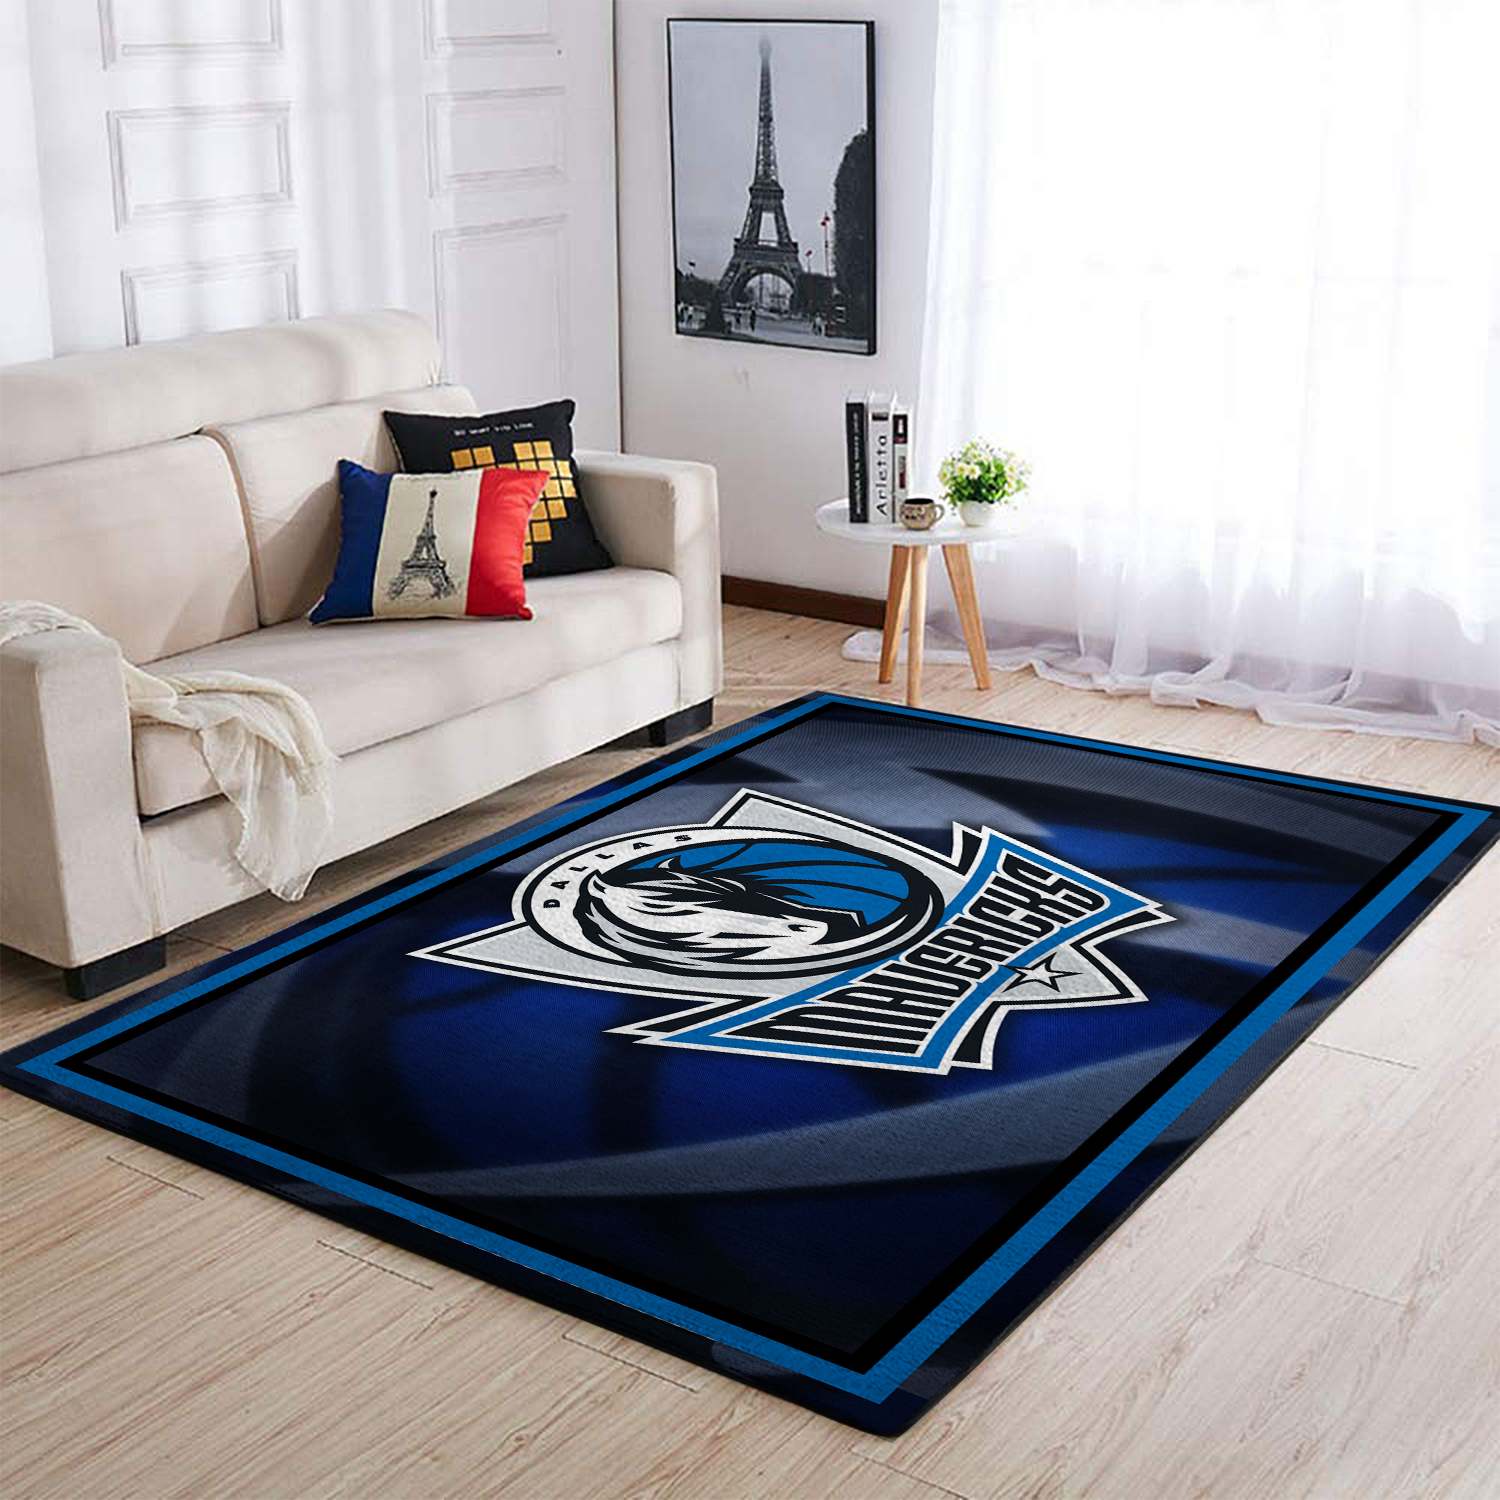 Dallas Mavericks Area Rugs Living Room Carpet SIC191207 Basketball Rugs Local Brands Floor Decor